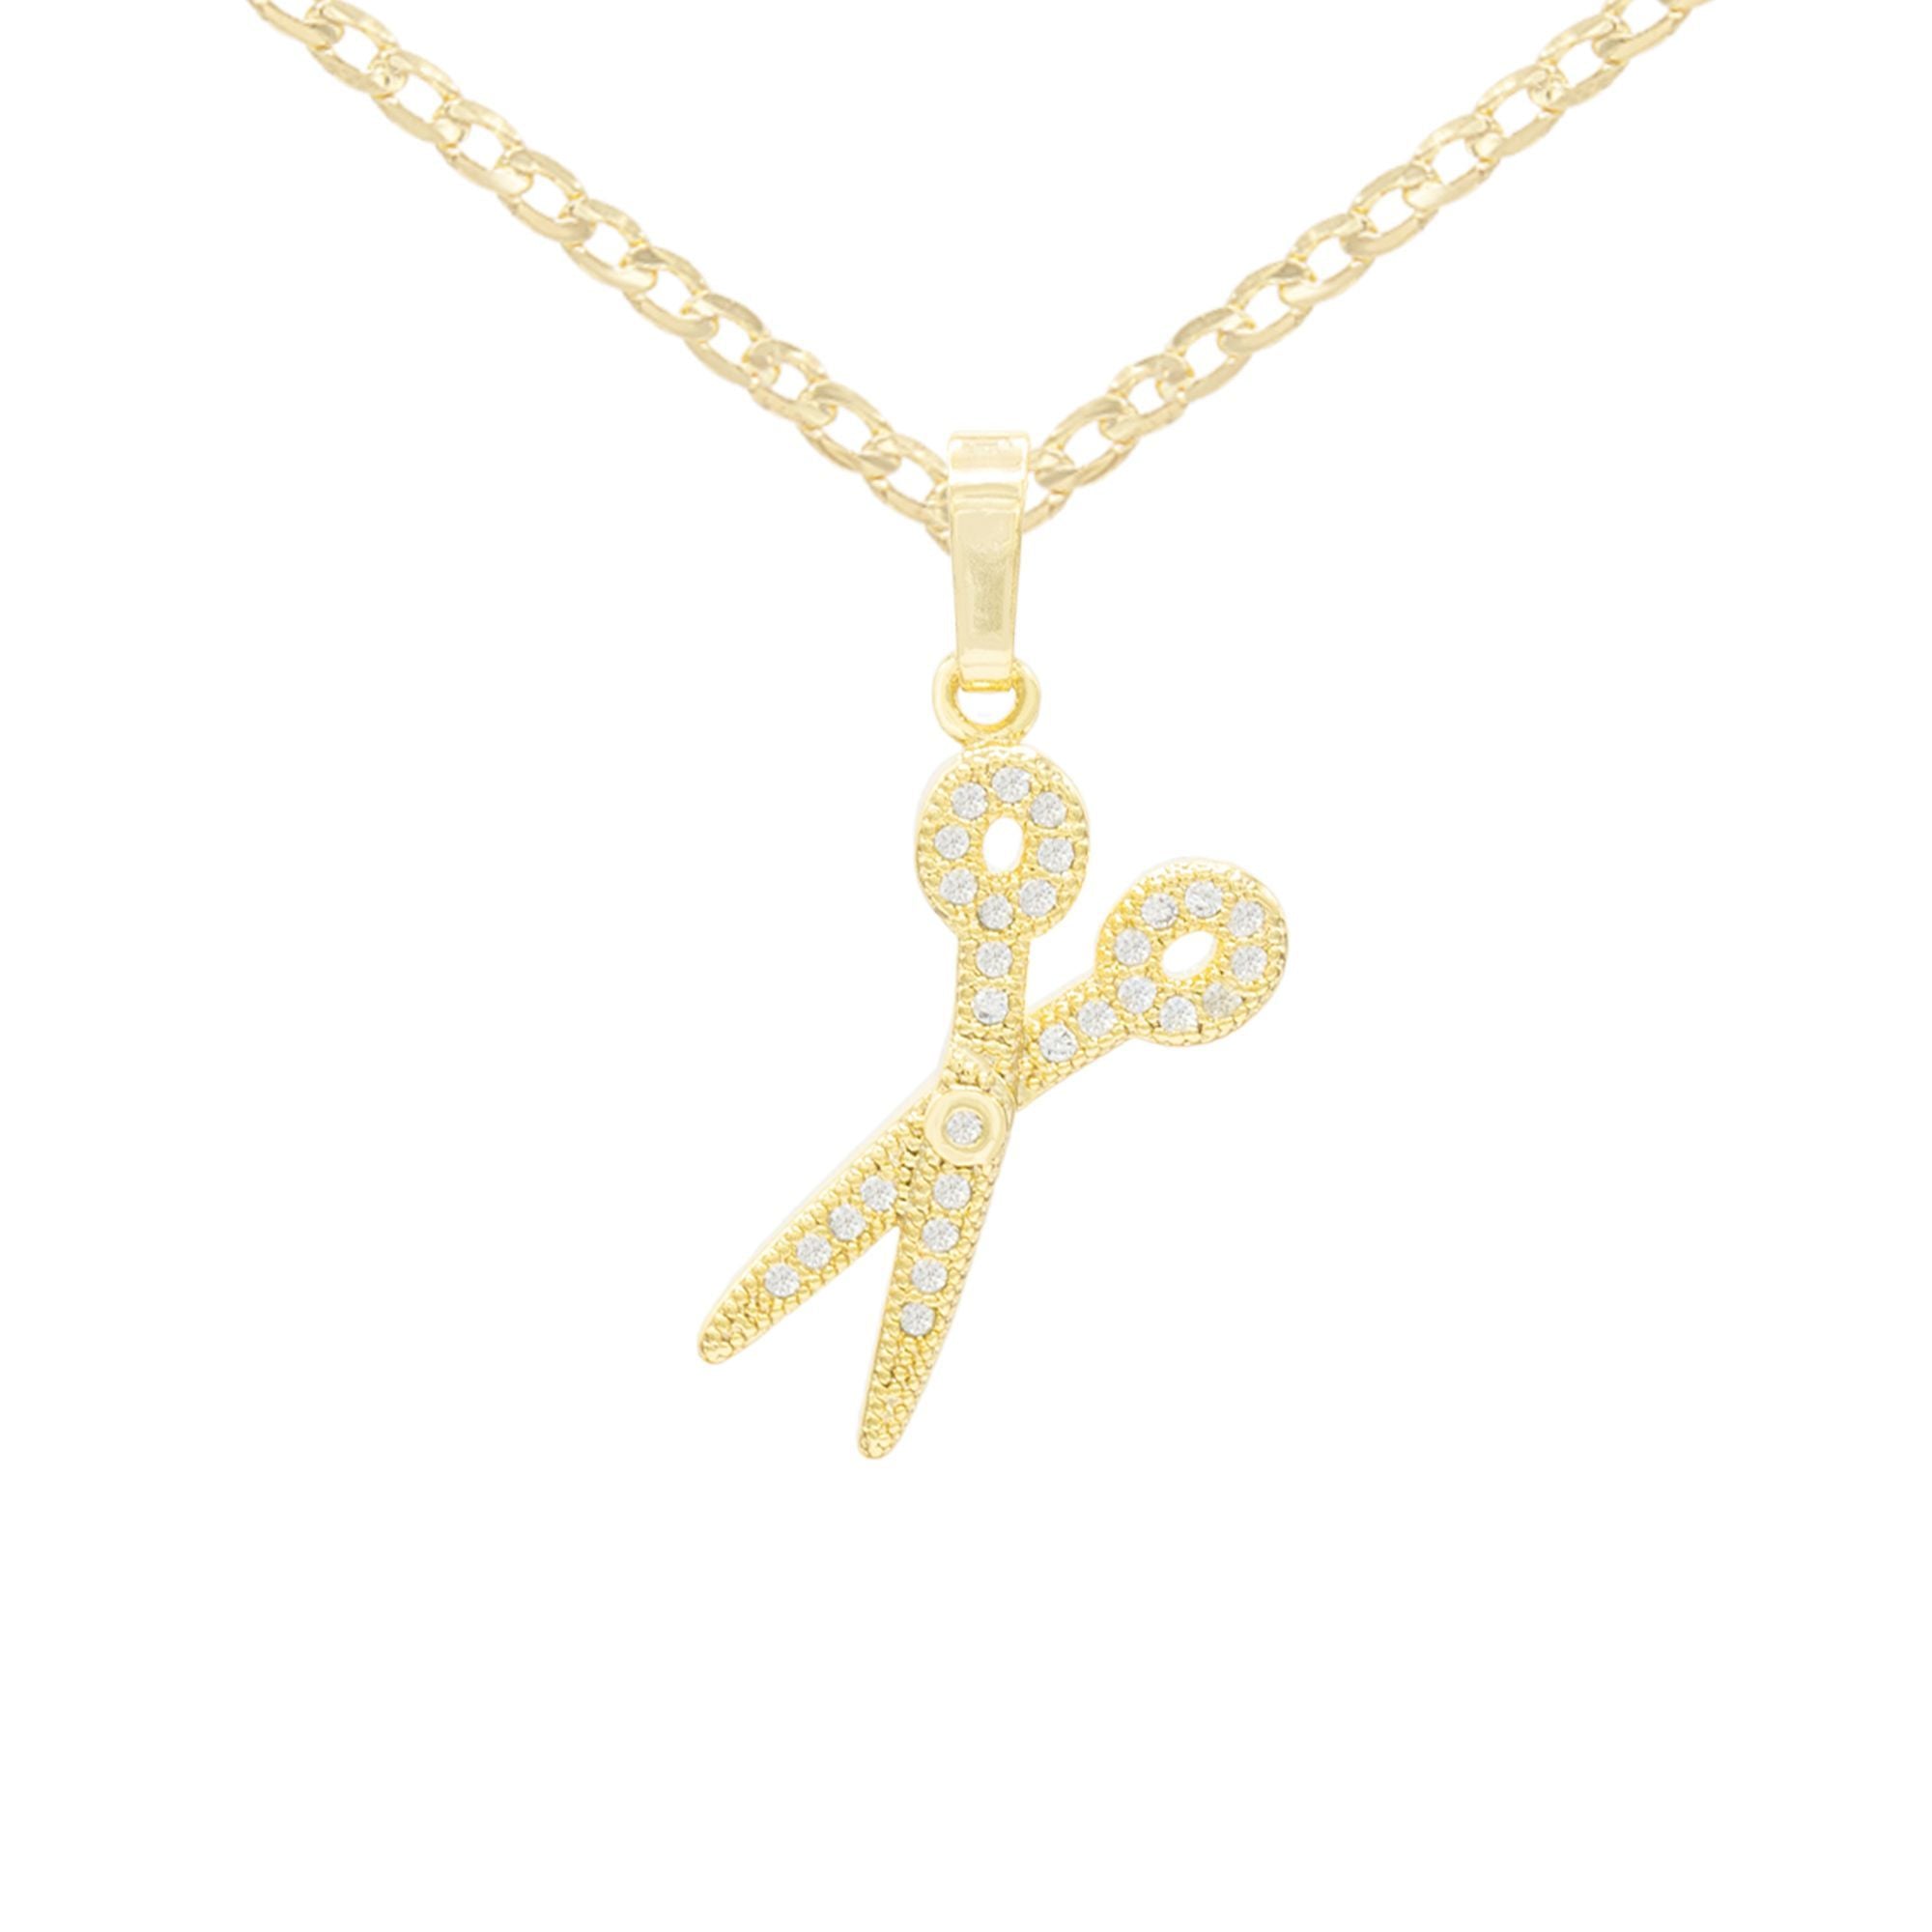 Cubic Zirconia Scissors Pendant 14K Gold Filled Necklace Set